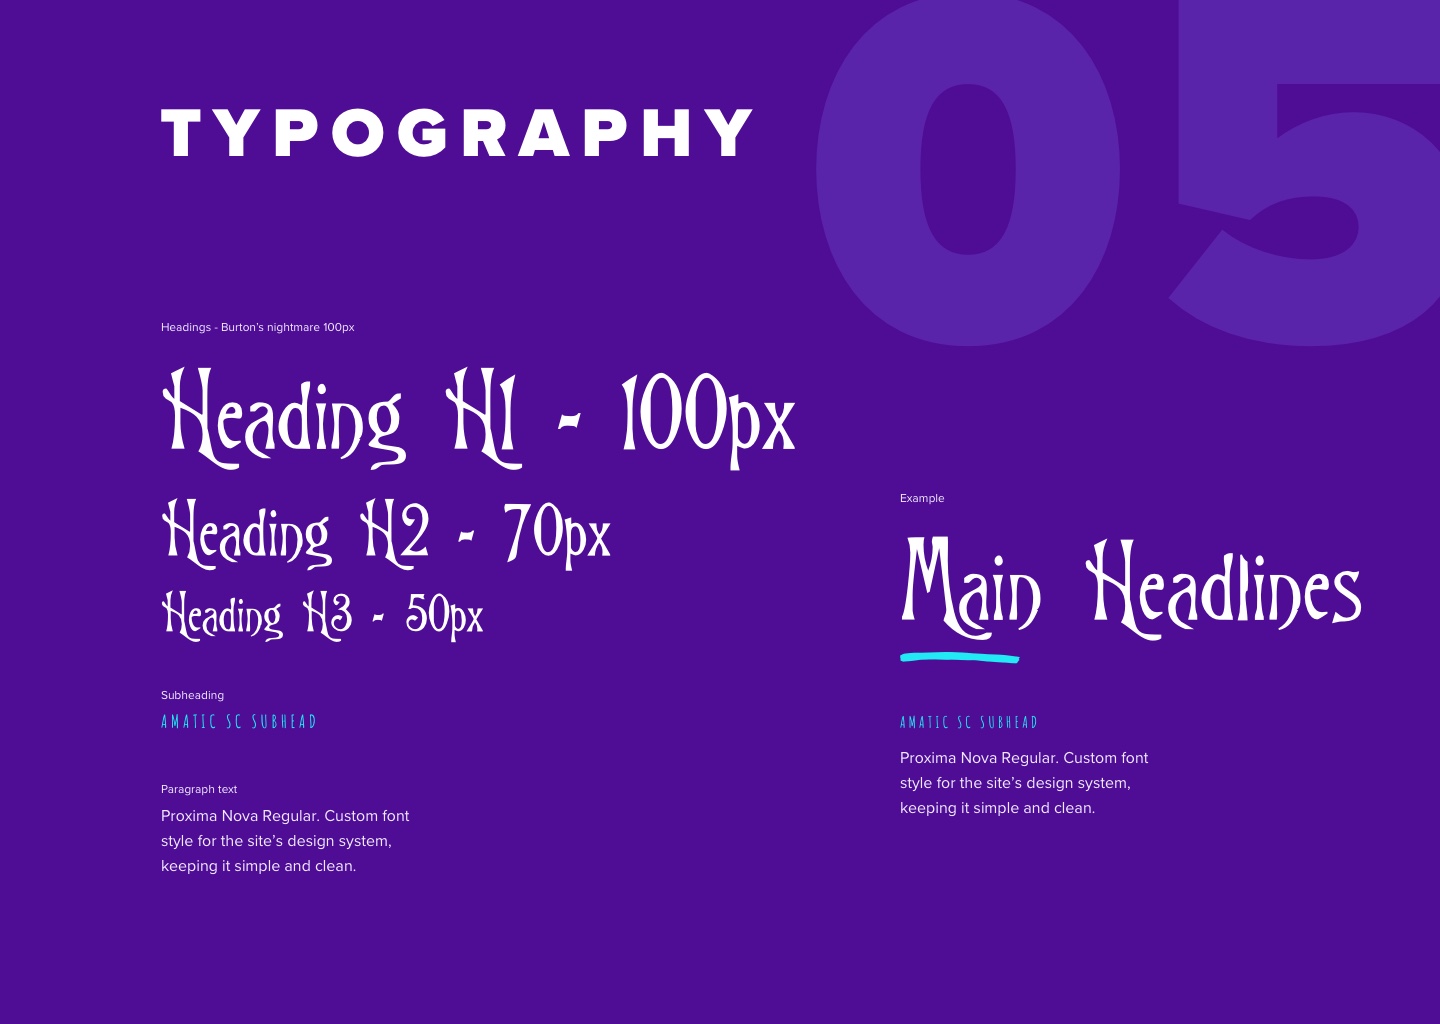 6 deafink_typography.jpg